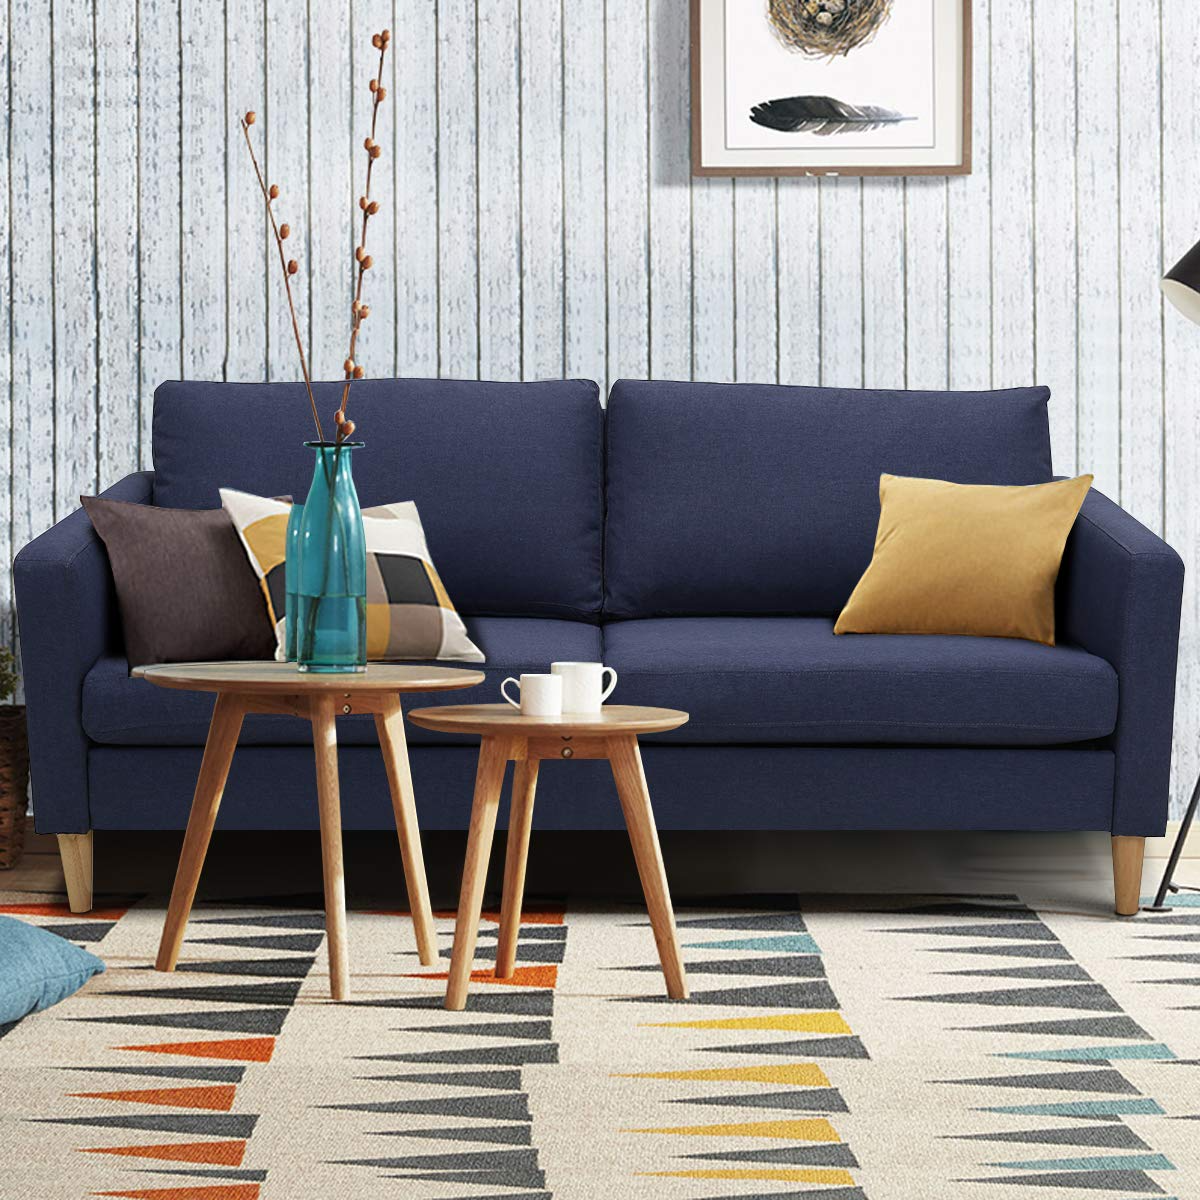 Giantex Modern Upholstered Accent Sofa, Fabric Futon Sofa Bed